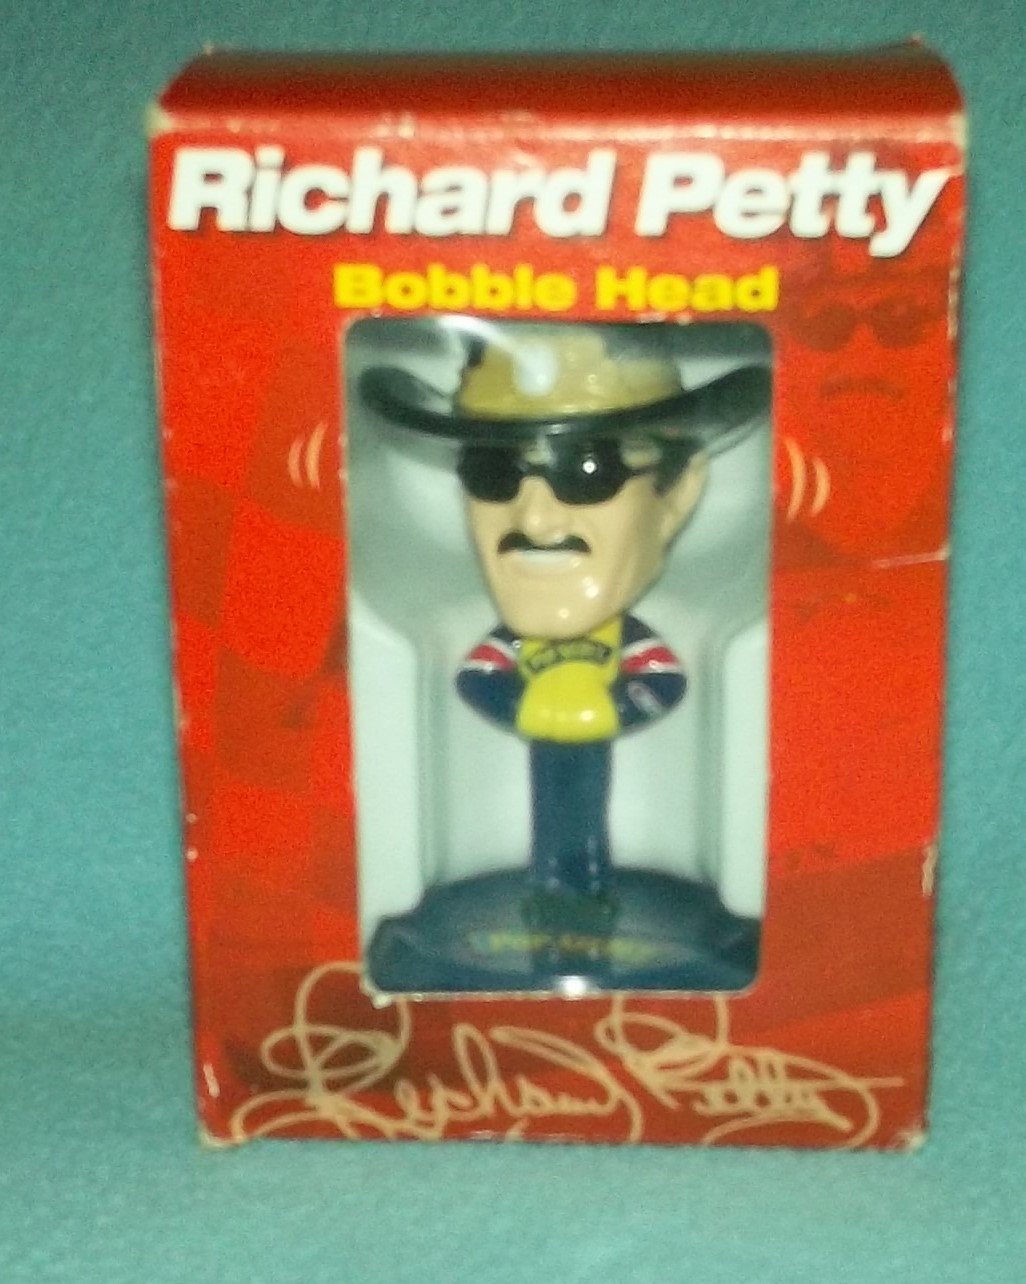 Pop Secret RICHARD PETTY Bobble Head 2002